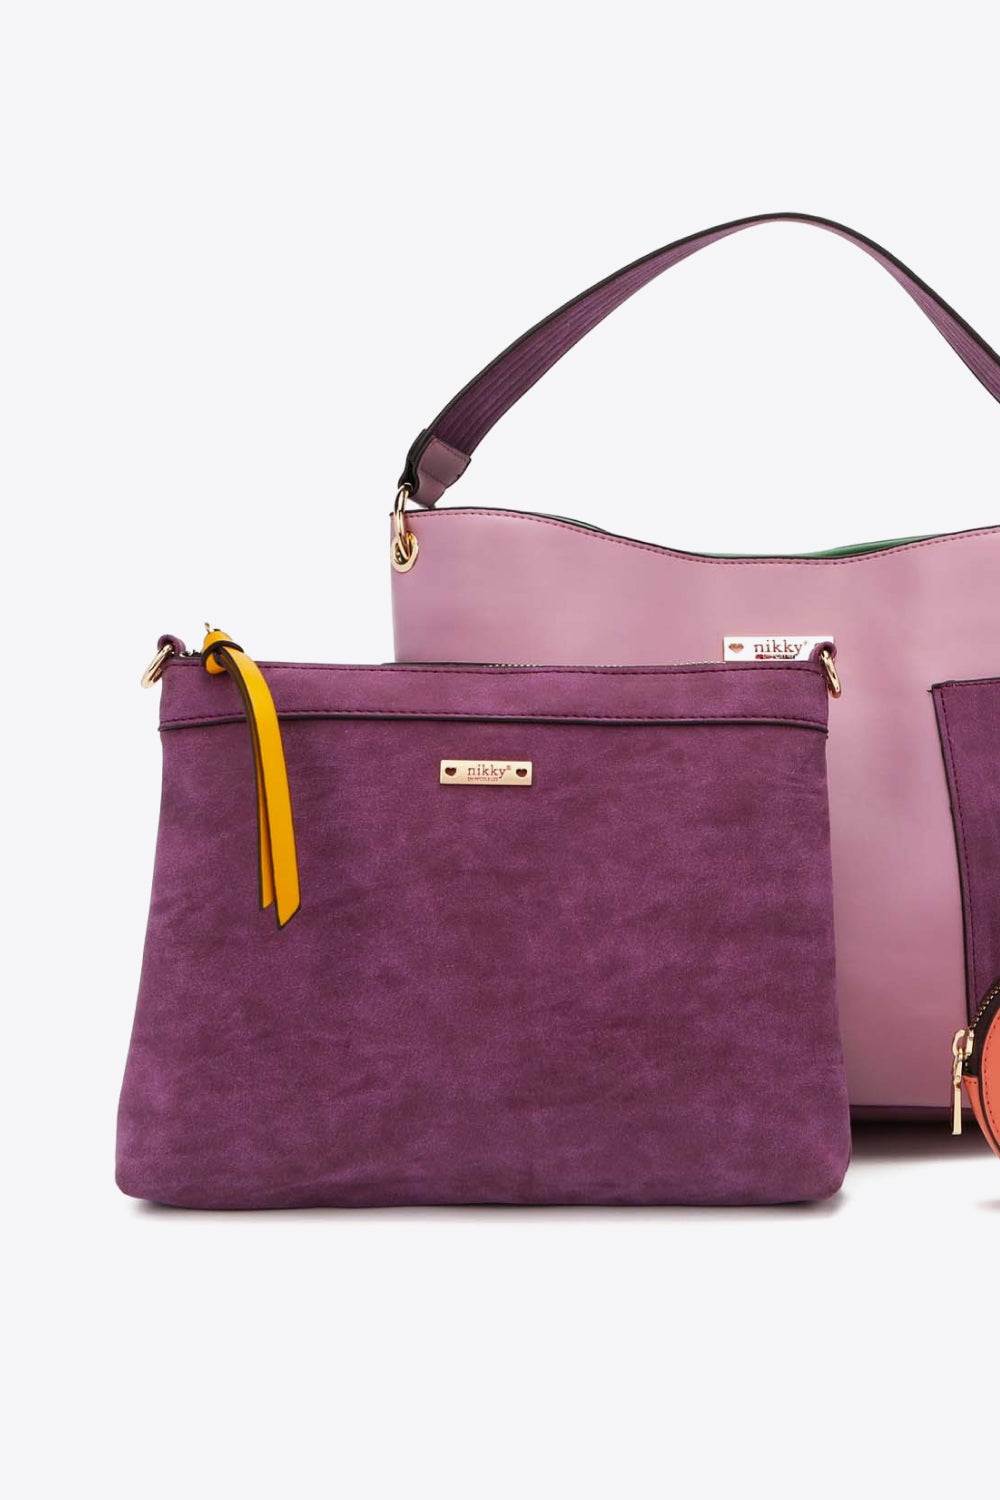 Dim Gray Nicole Lee USA Sweetheart Handbag Set Sentient Beauty Fashions *Accessories